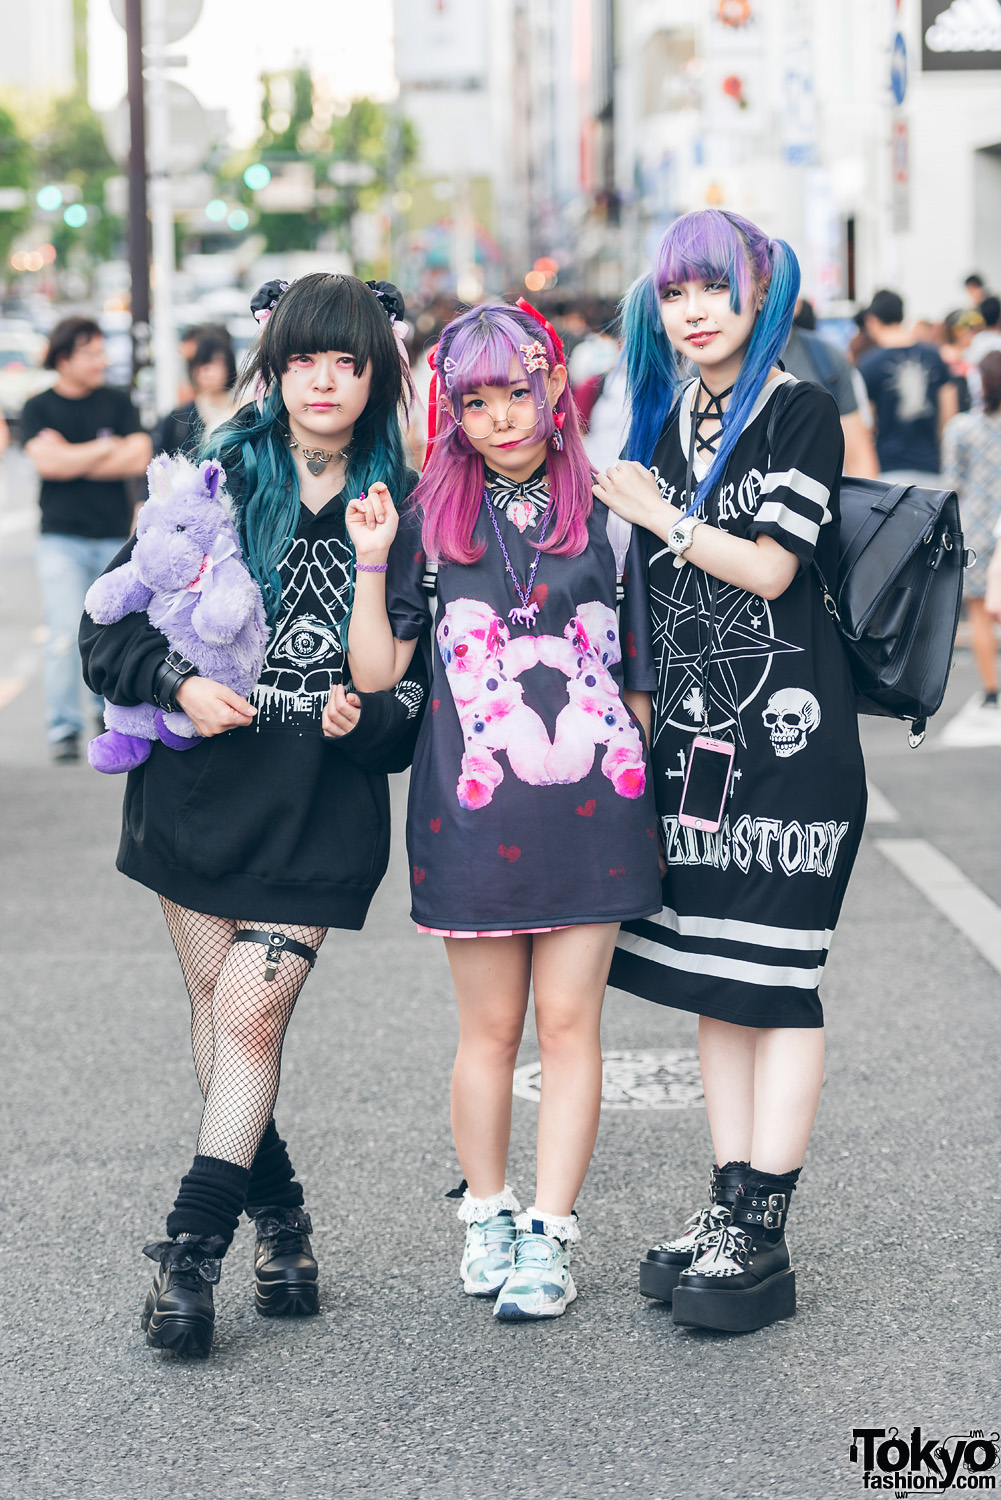 Harajuku Girls w/ Colorful Hairstyles in Candye Syrup, Listen Flavor, Nile Perch, Glad News, Ponicomonyura, Yosuke & WC